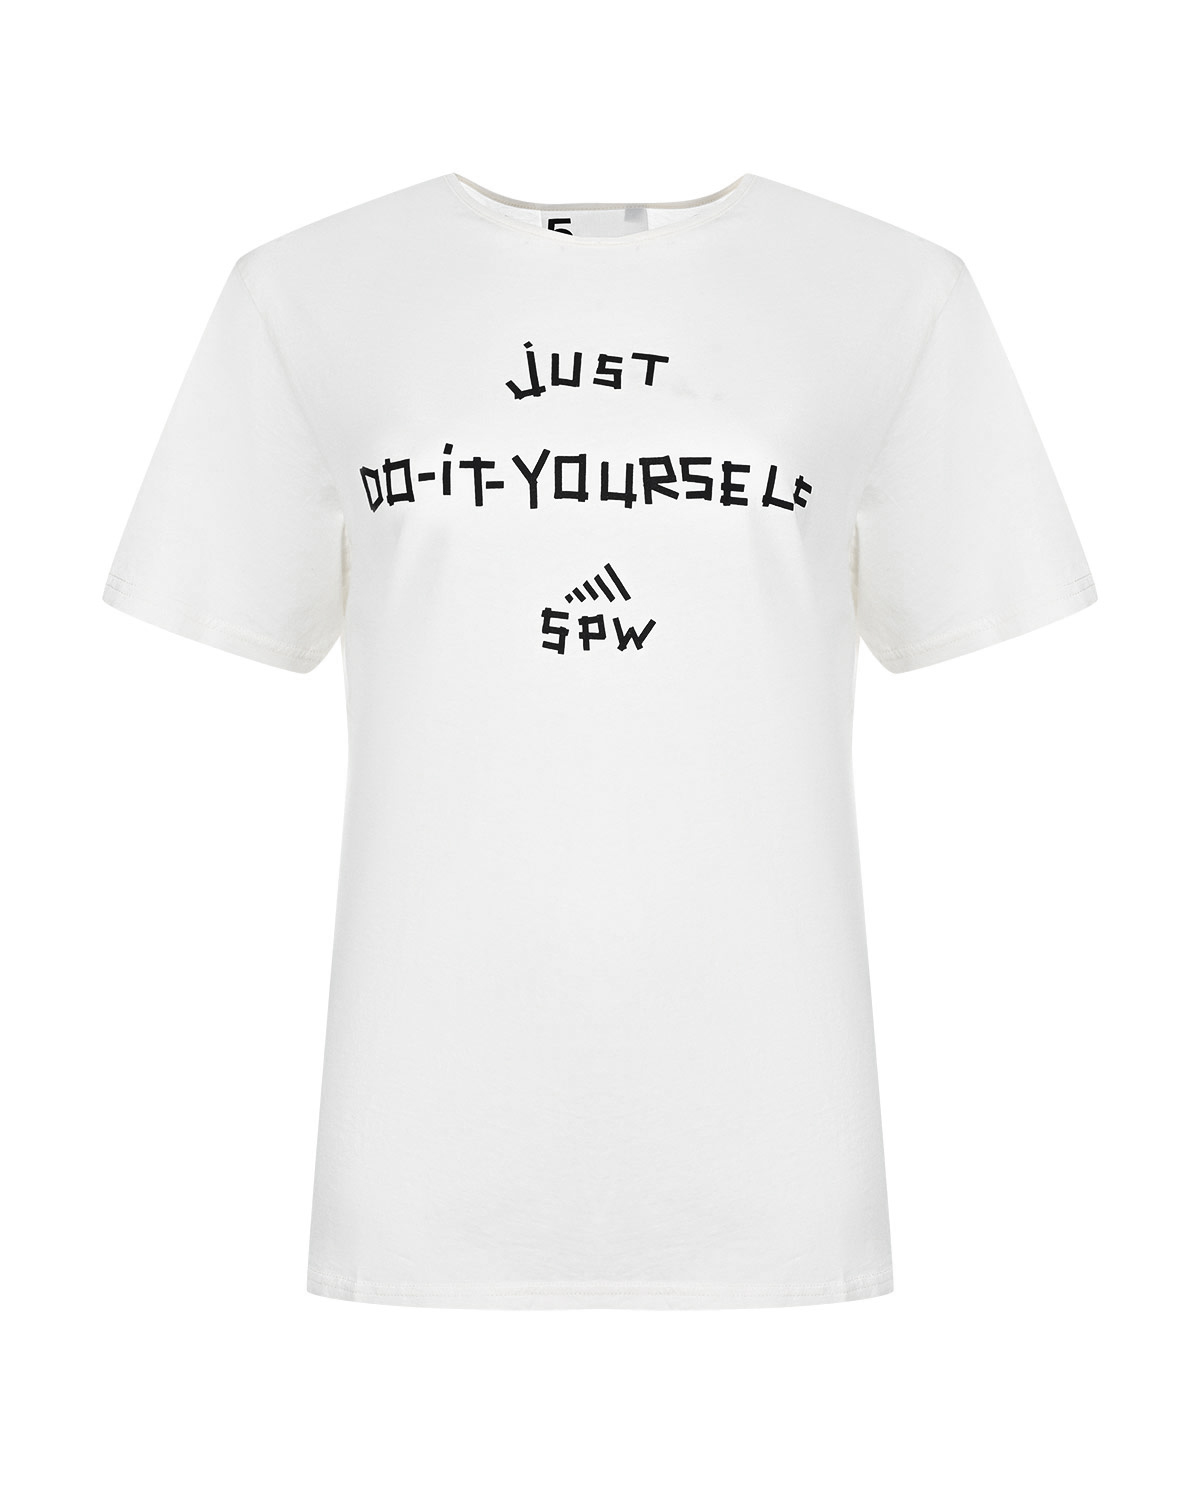 Белая футболка с принтом "just do it yourself" 5 Preview - фото 1